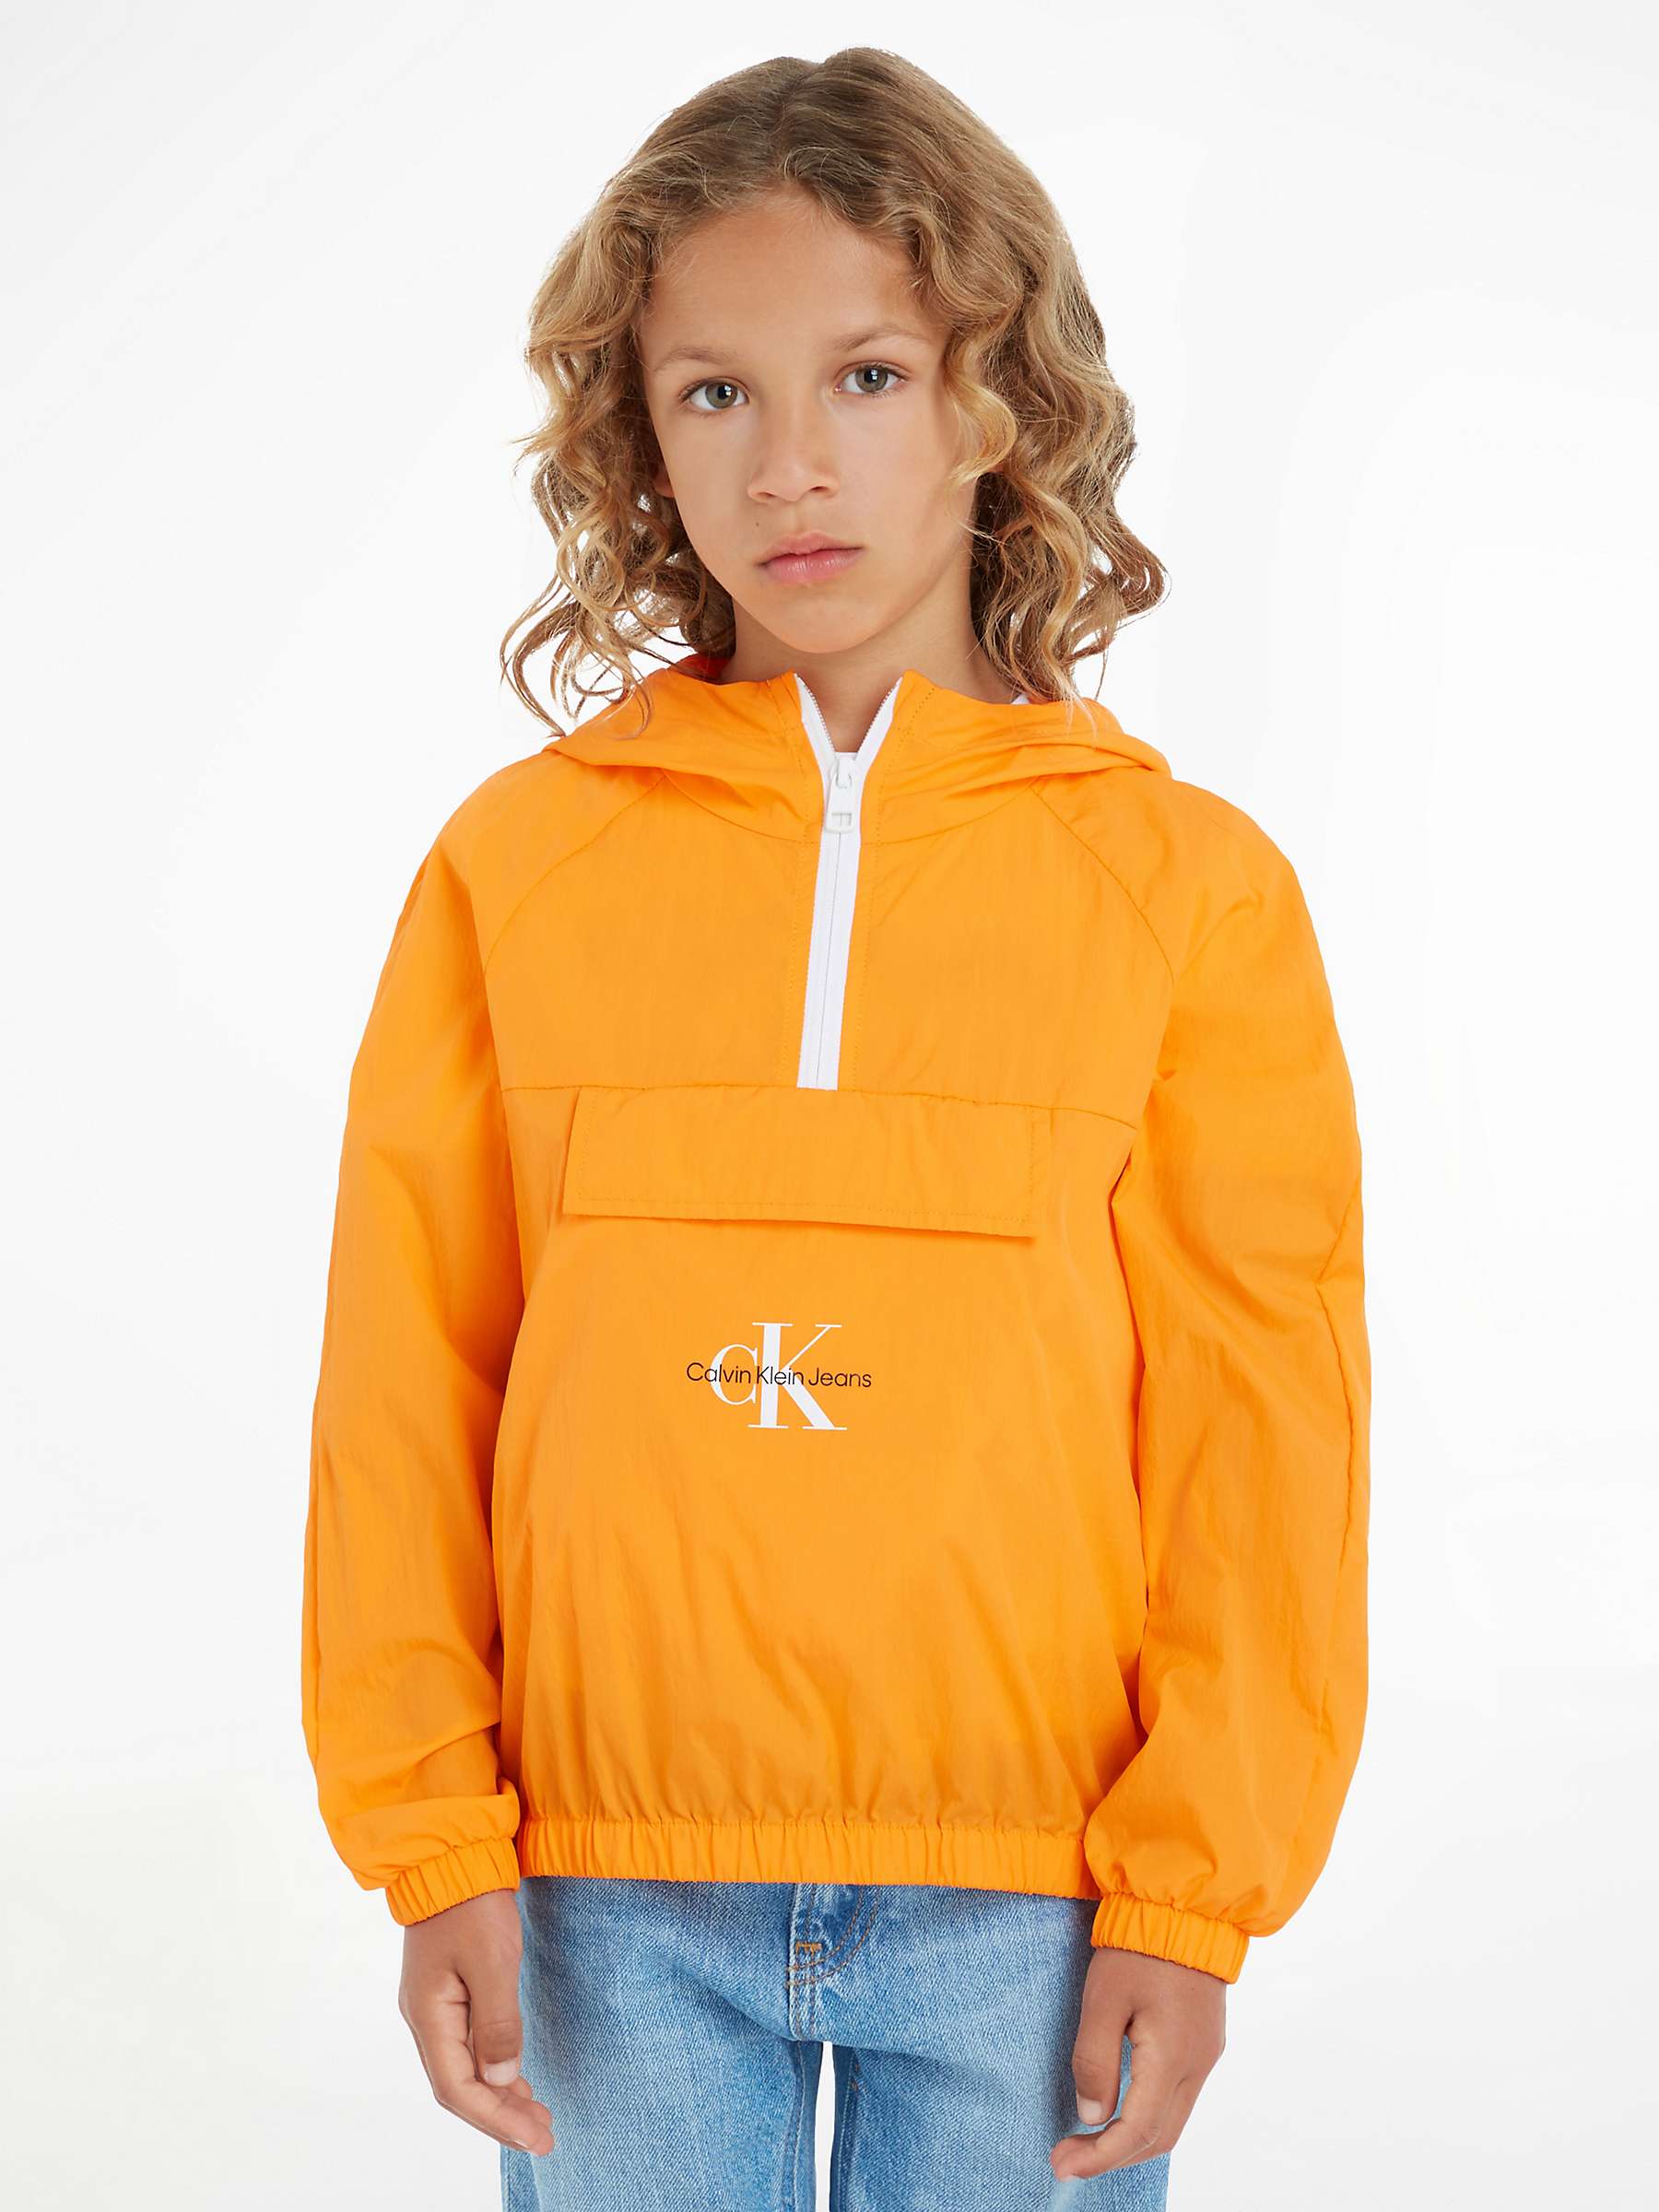 Buy Calvin Klein Kids Monogram Windbreaker Jacket, Vibrant Orange Online at johnlewis.com